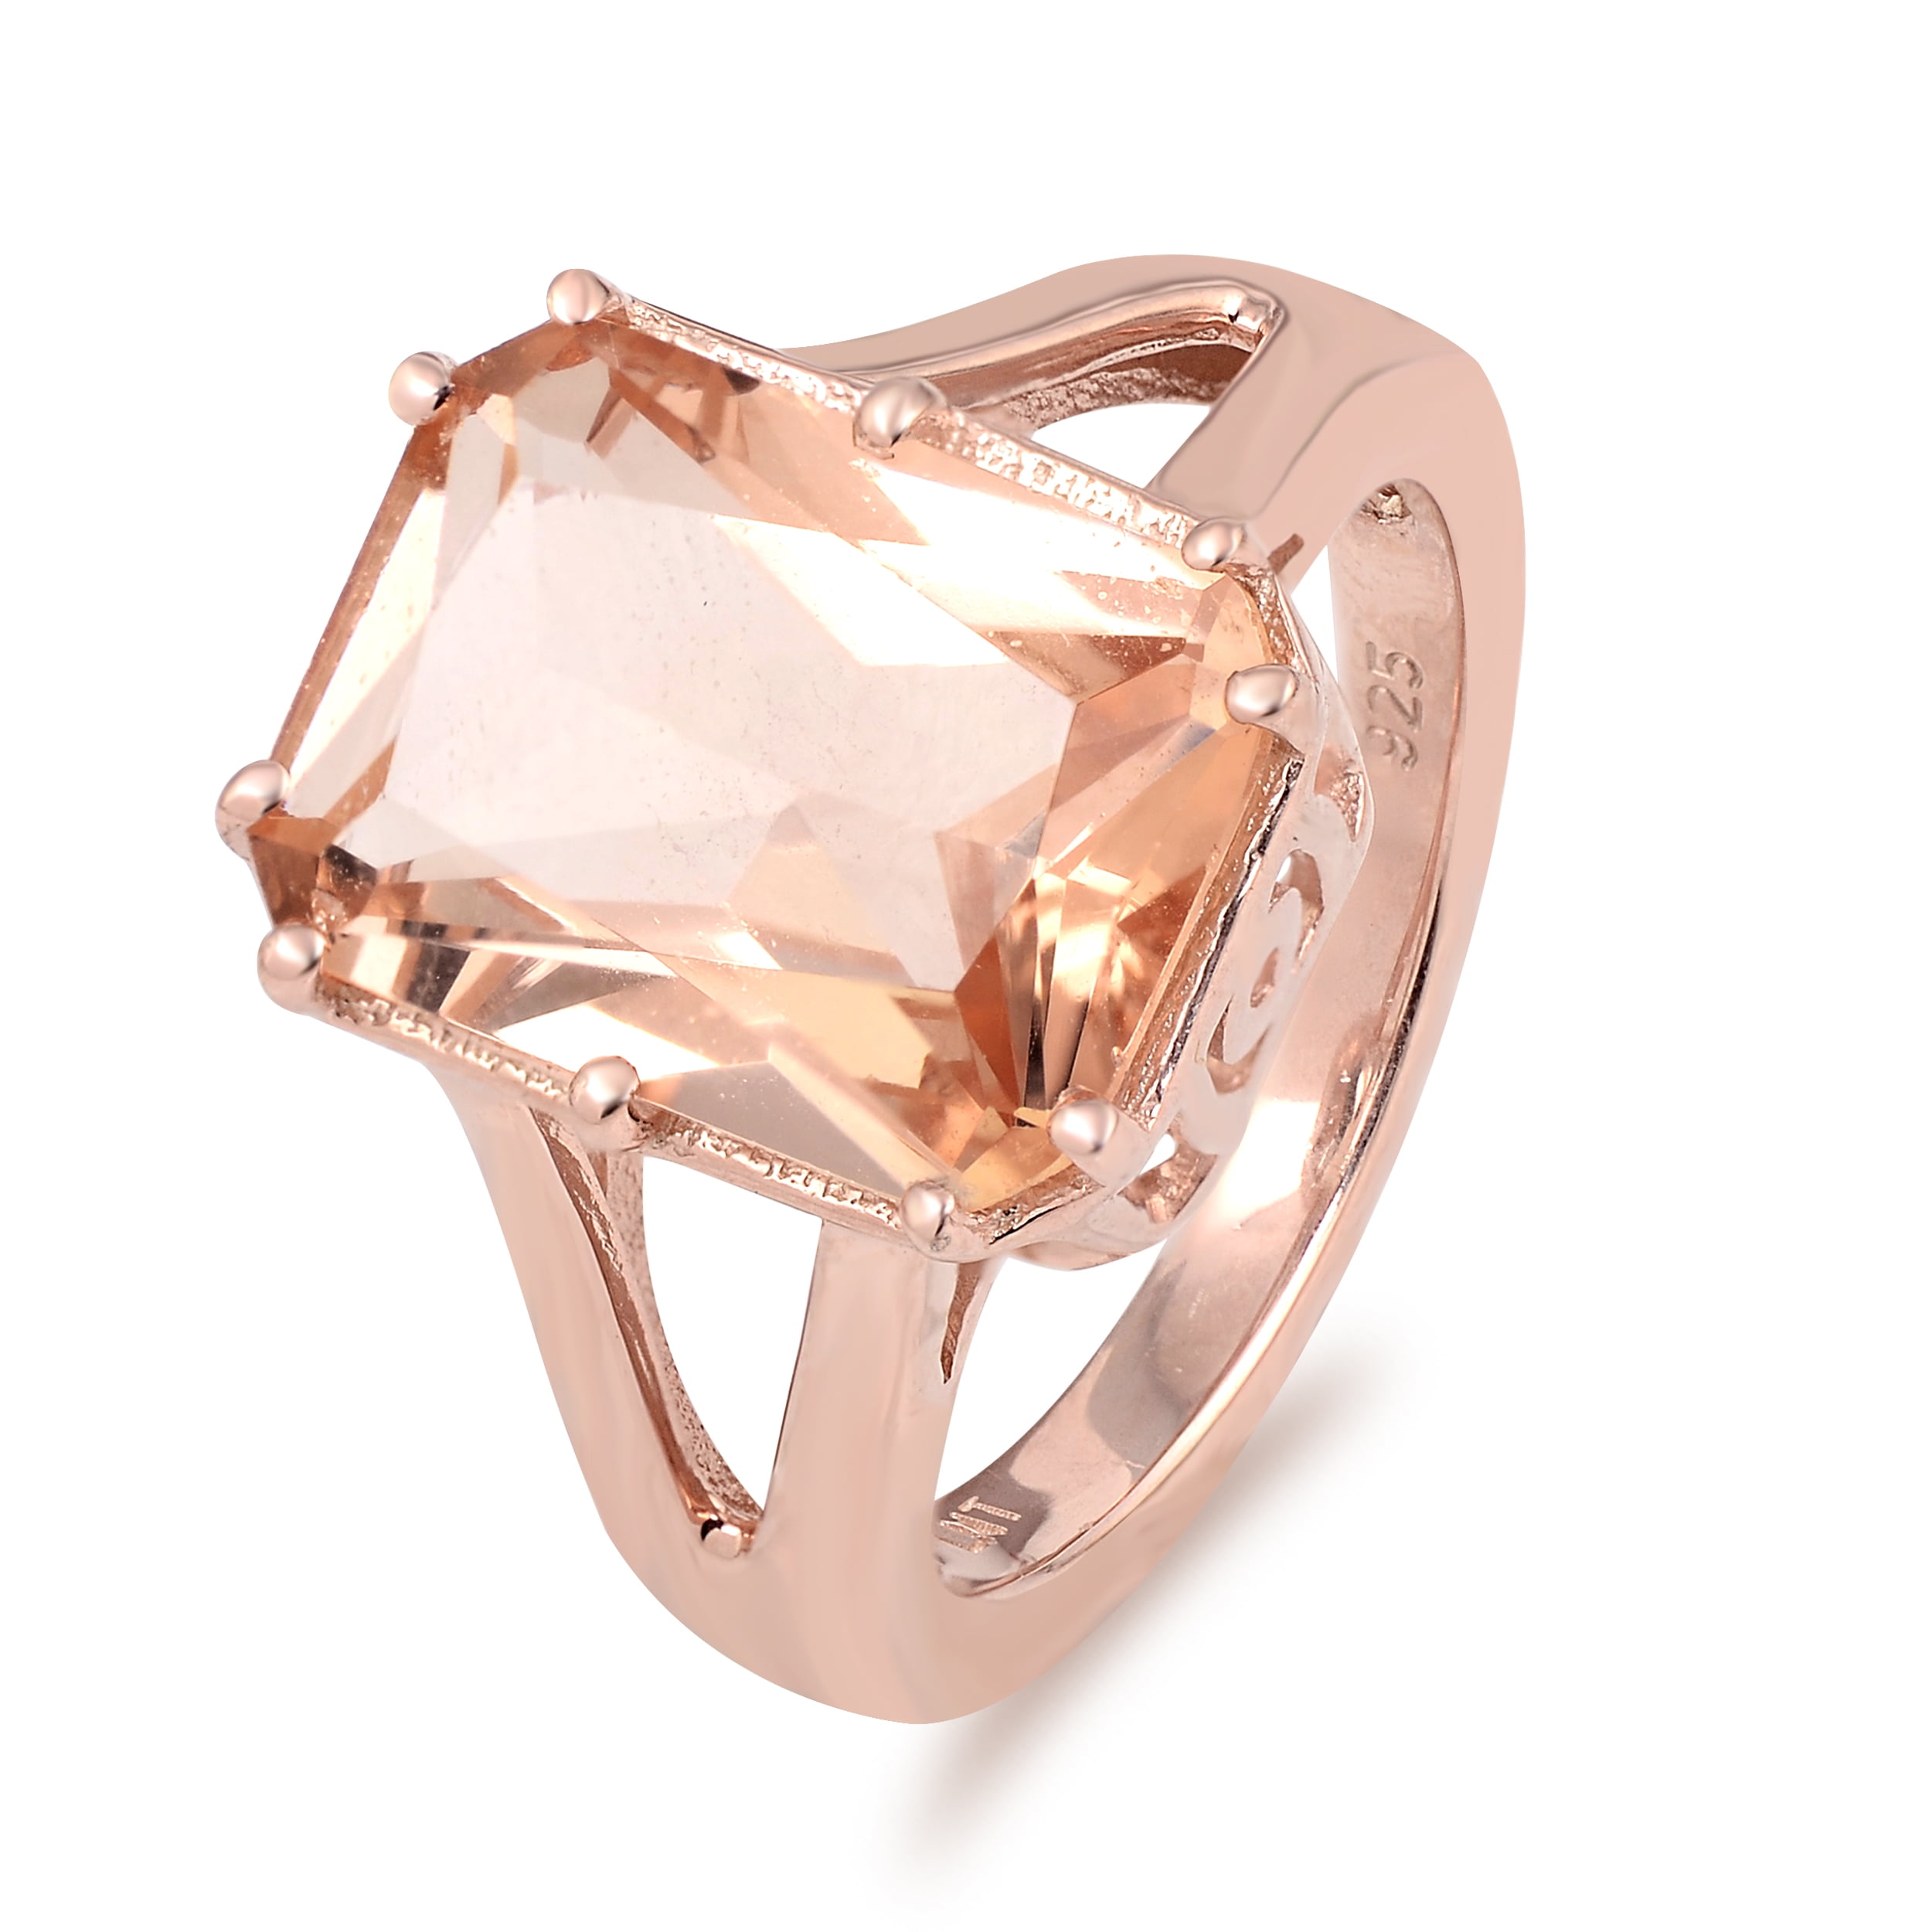 Natural Morganite Pink Gemstone Ring 925 Sterling Silver Women/'s Wedding Jewelry